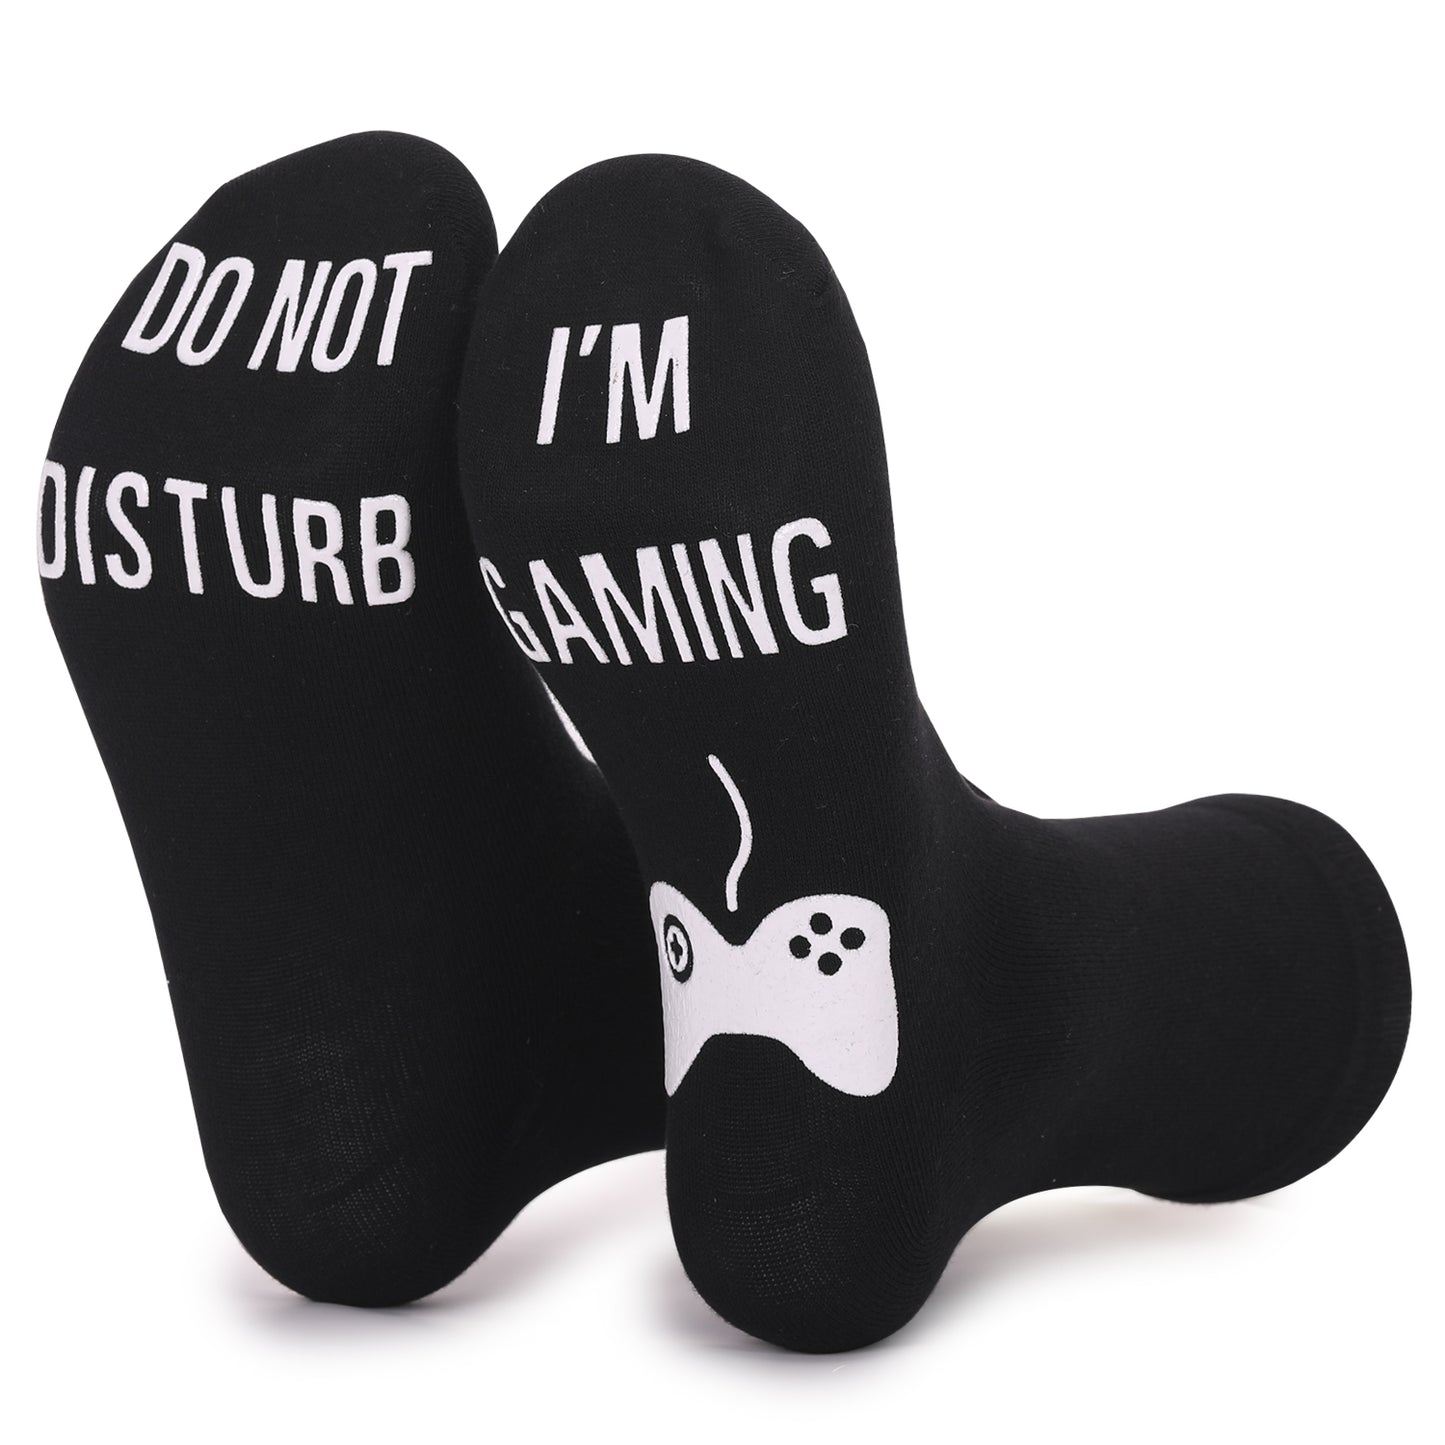 DO NOT DISTURB Men's Gaming Socks